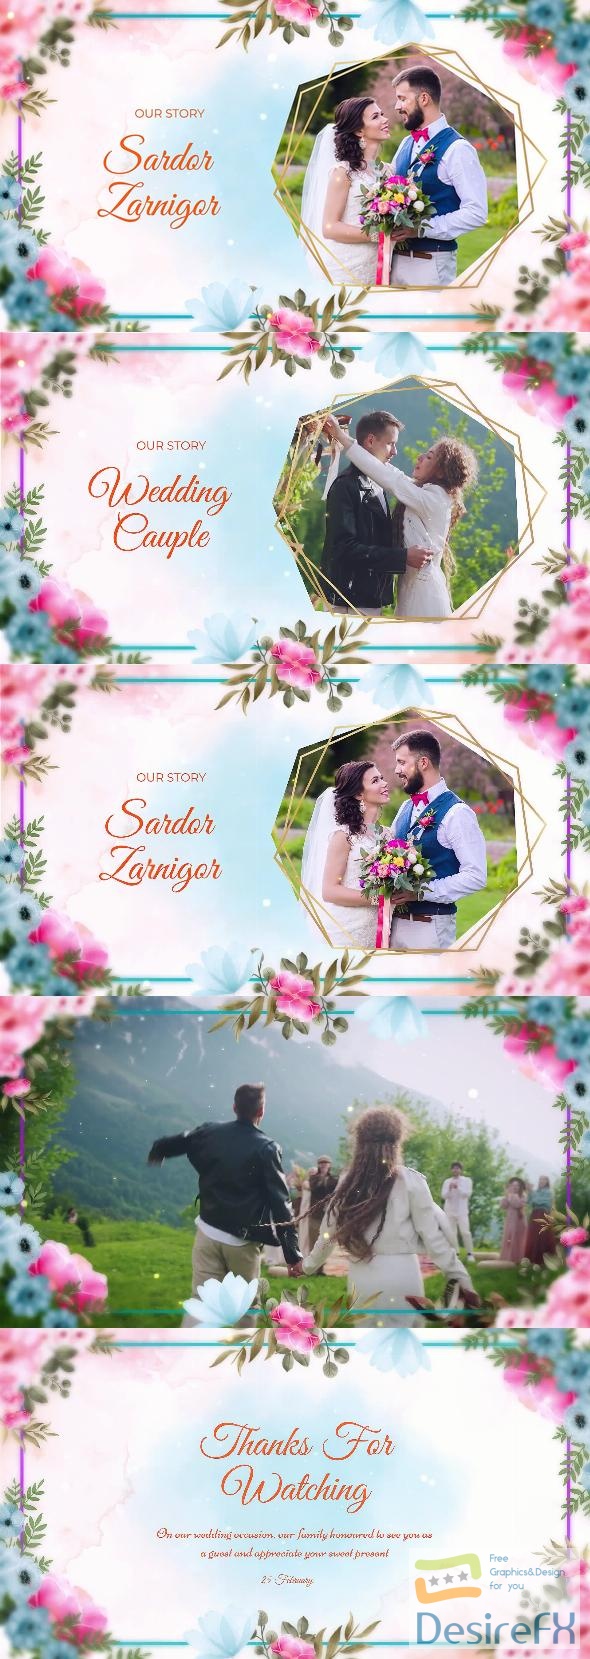 VideoHive Wedding Slideshow || Love Story Slideshow MOGRT 43172865